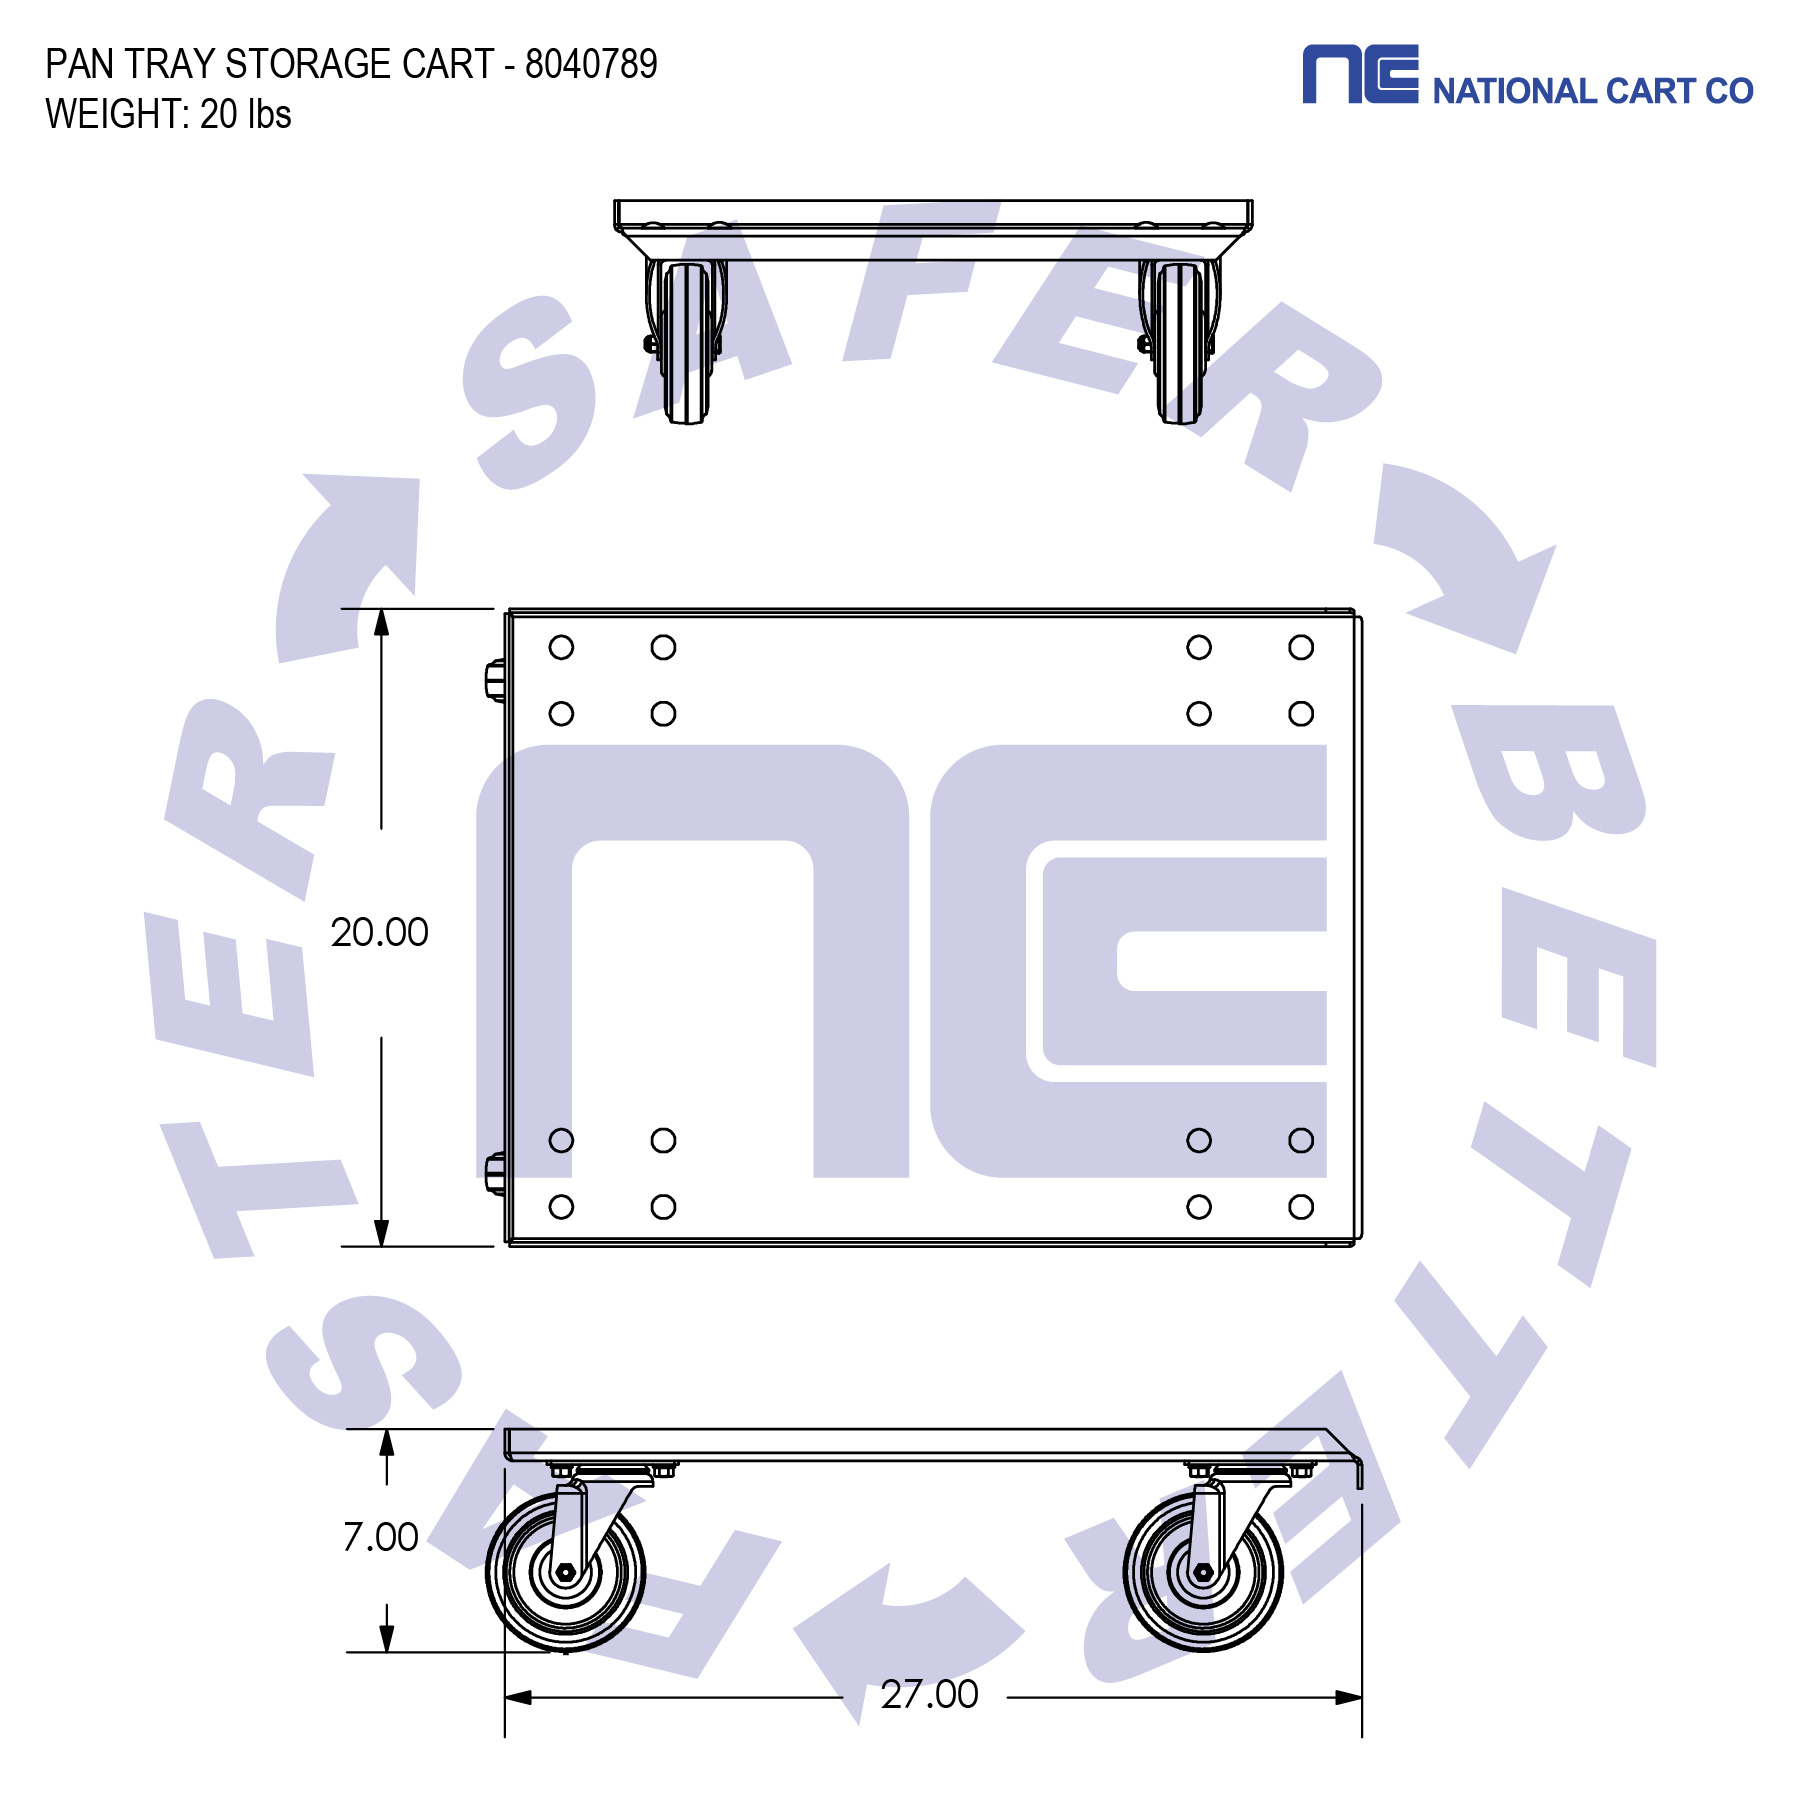 NSF certified Pan Tray Storage Carts kitchen cart bakery cart restaurant cart